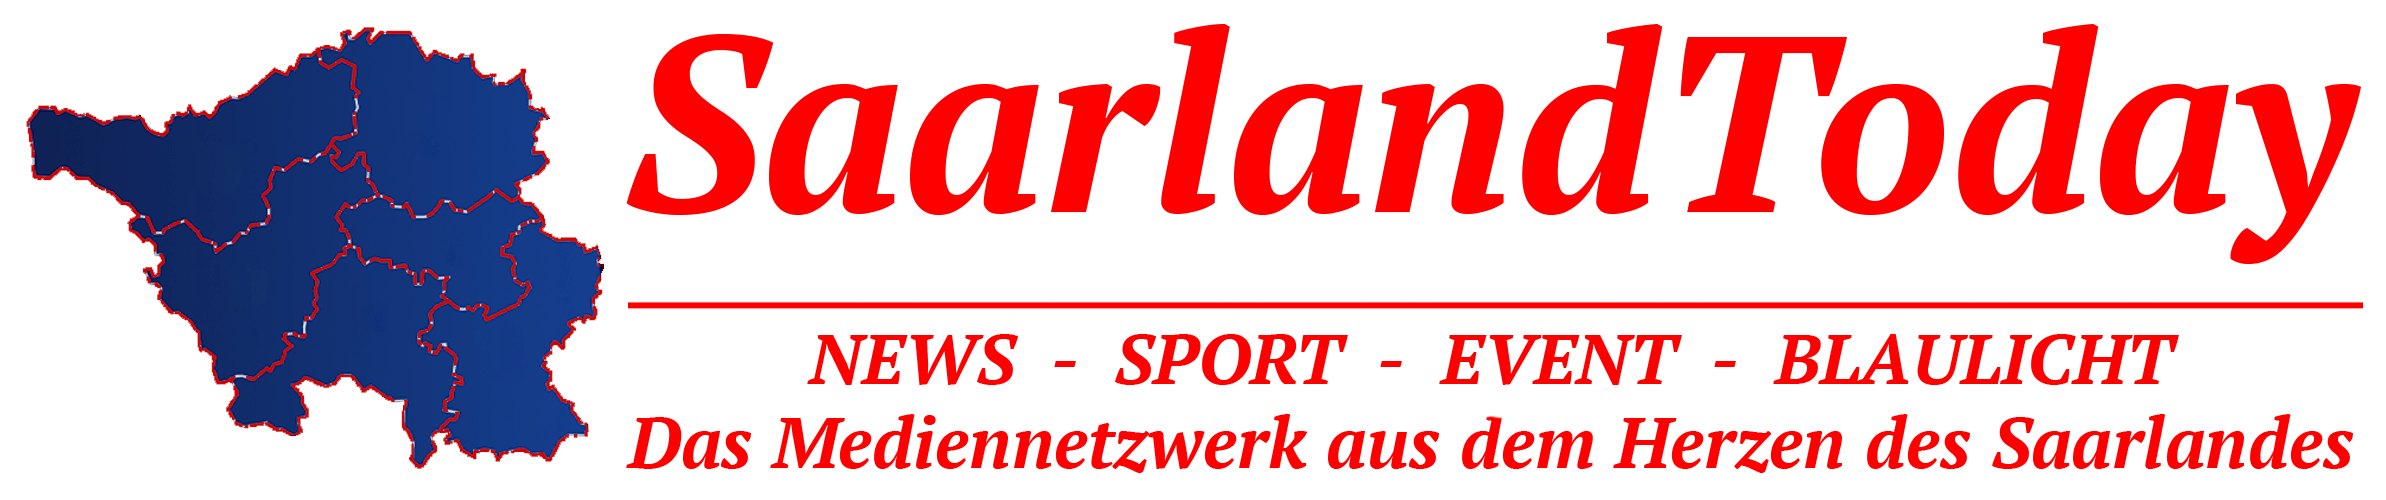 SaarlandToday - SPORT - Basketball